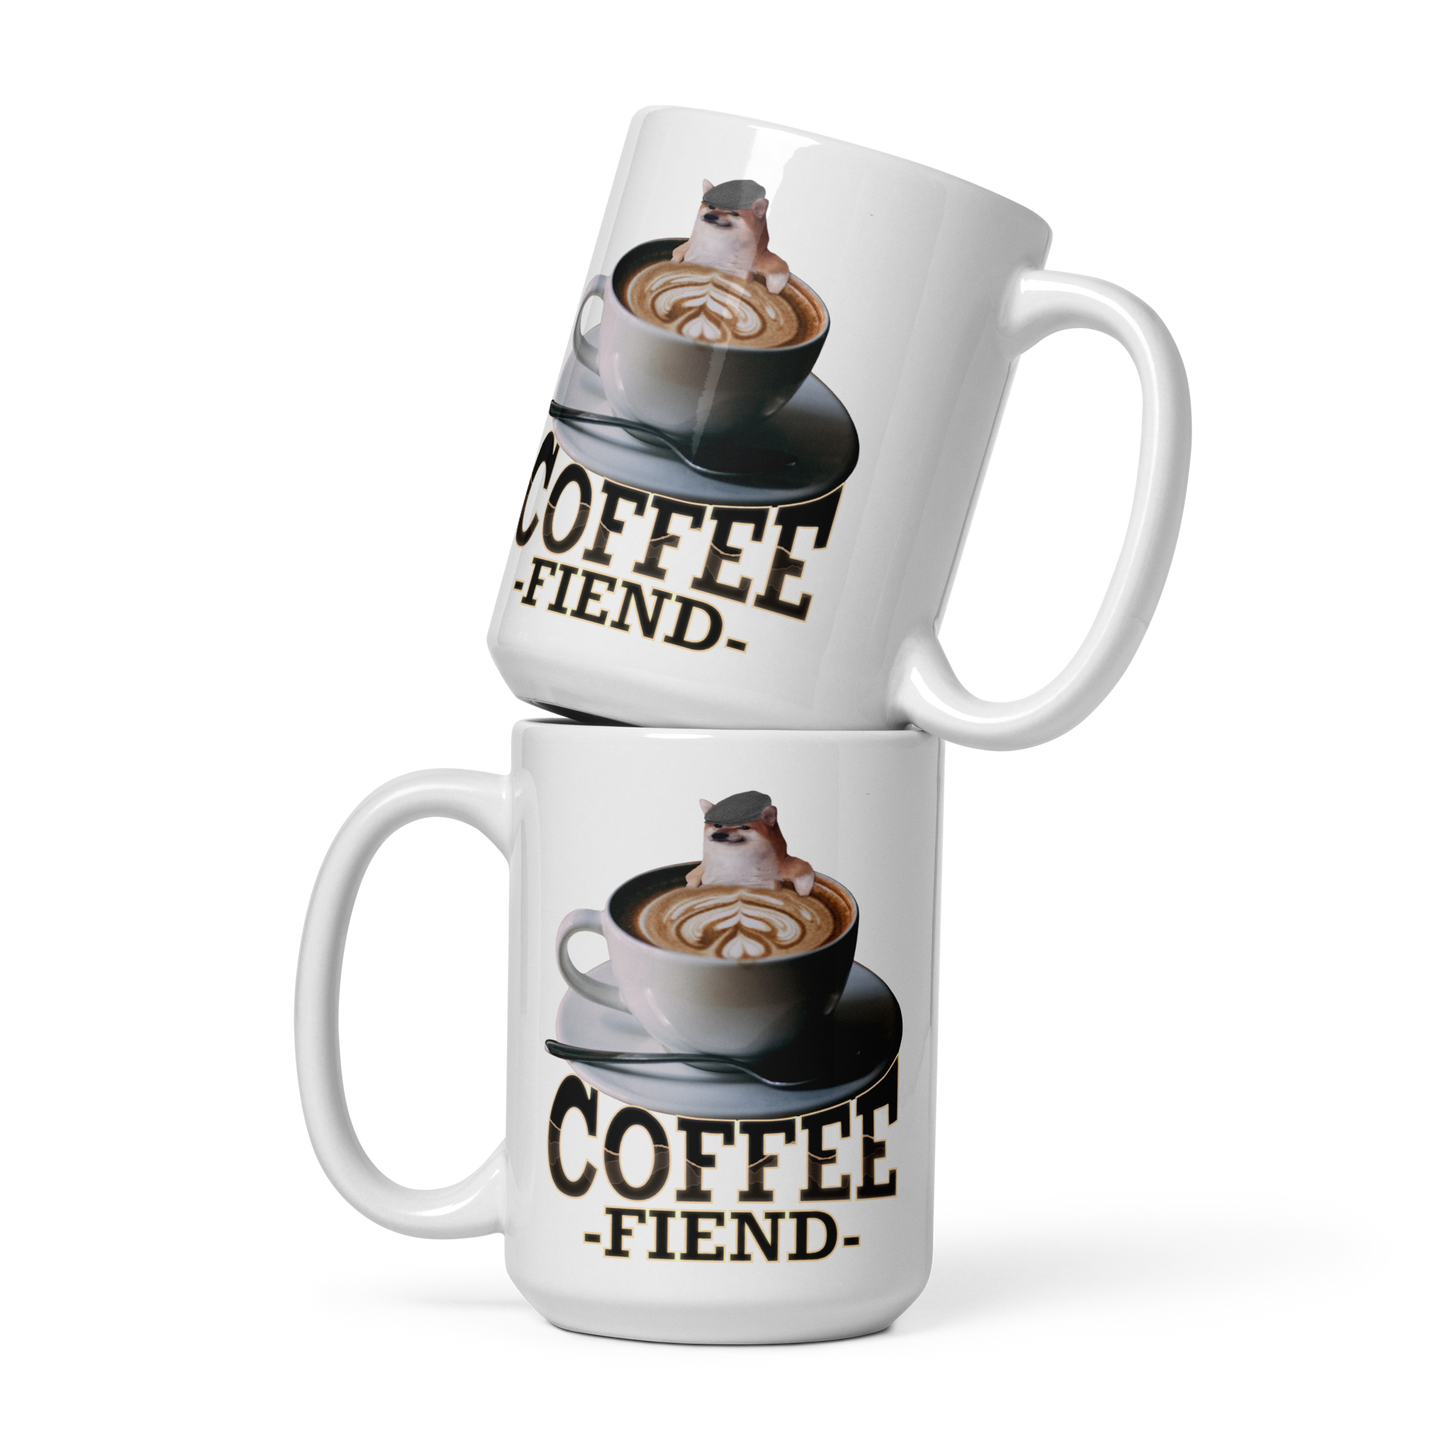 NAFO Coffee Fiend Mug